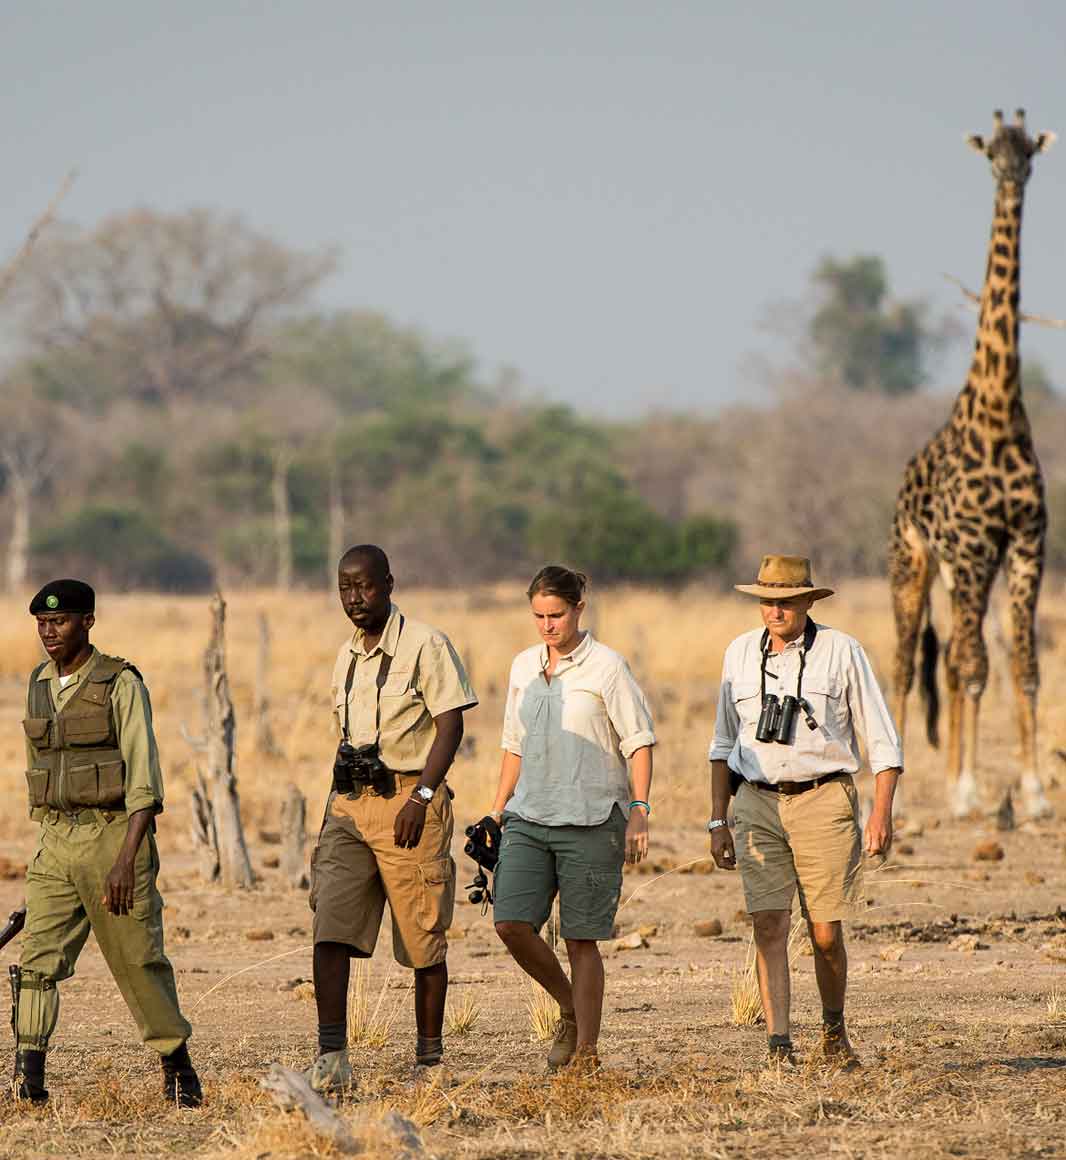 Giraffe on walking safari in Zambia